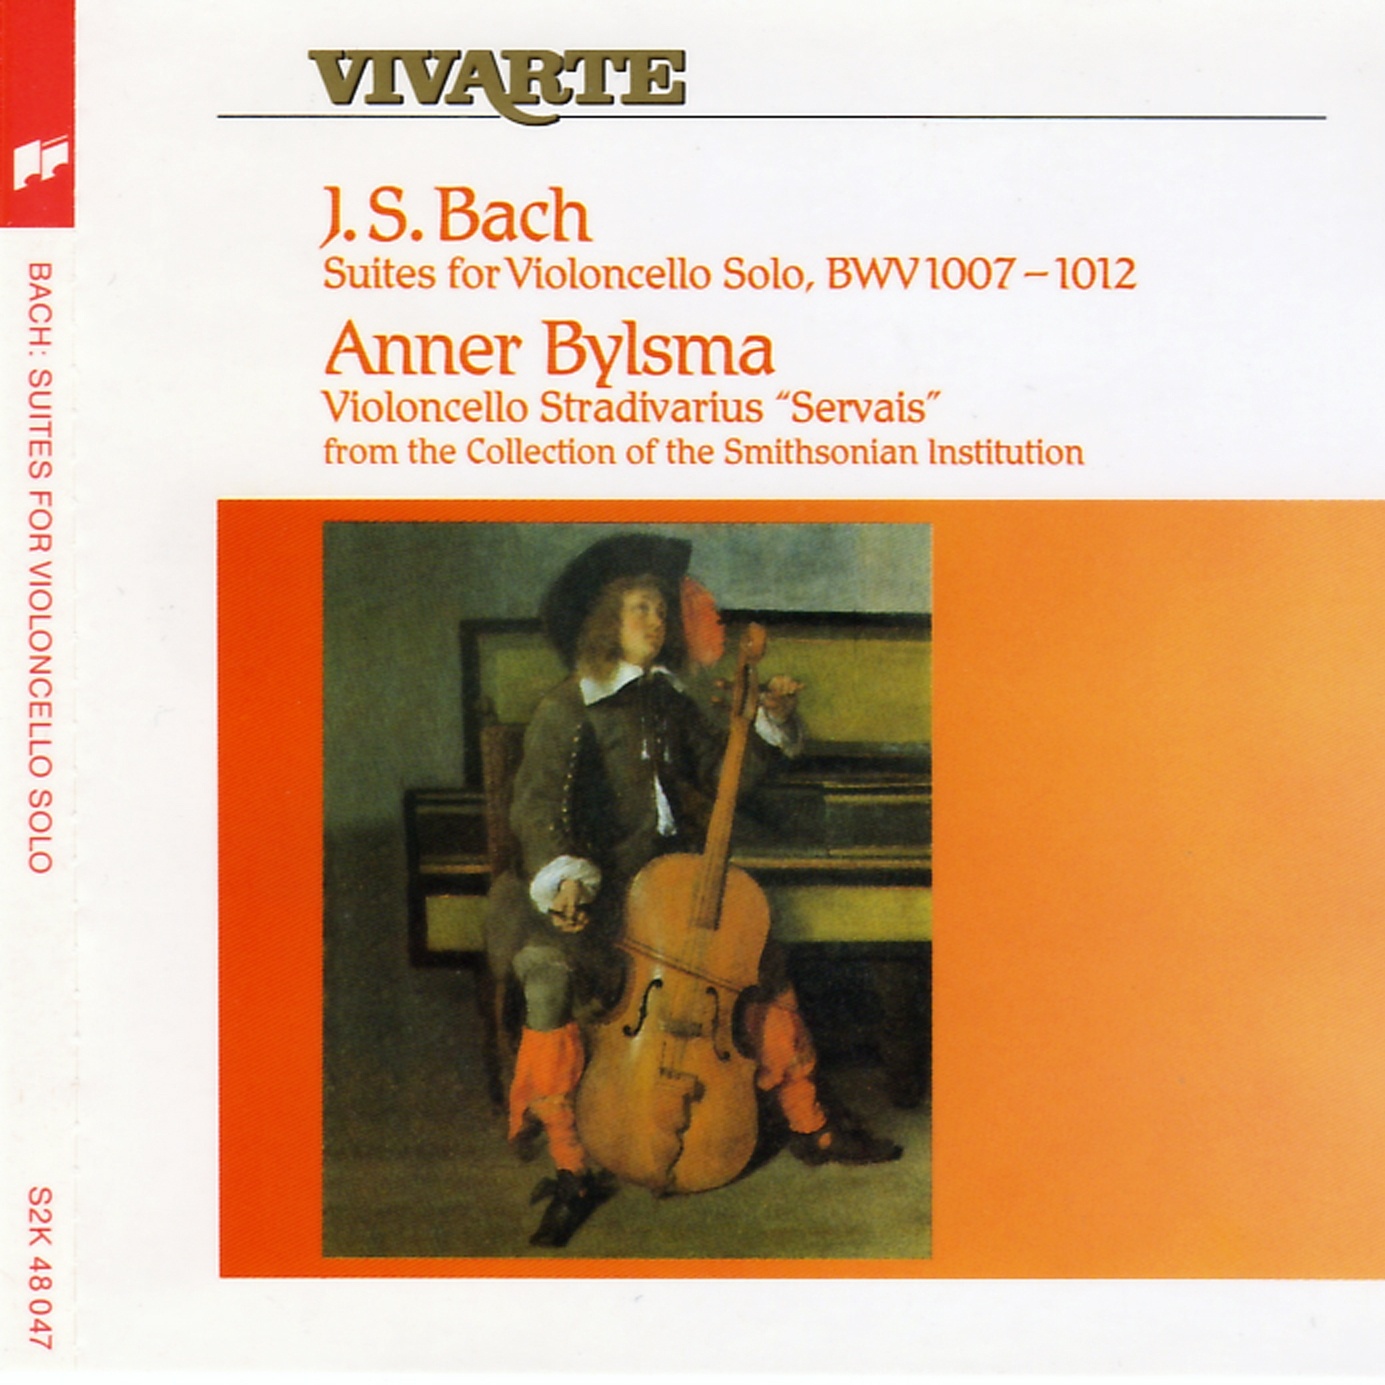 Johann Sebastian Bach: Suite no.2 in D minor, BMV1008 - 4.Sarabande